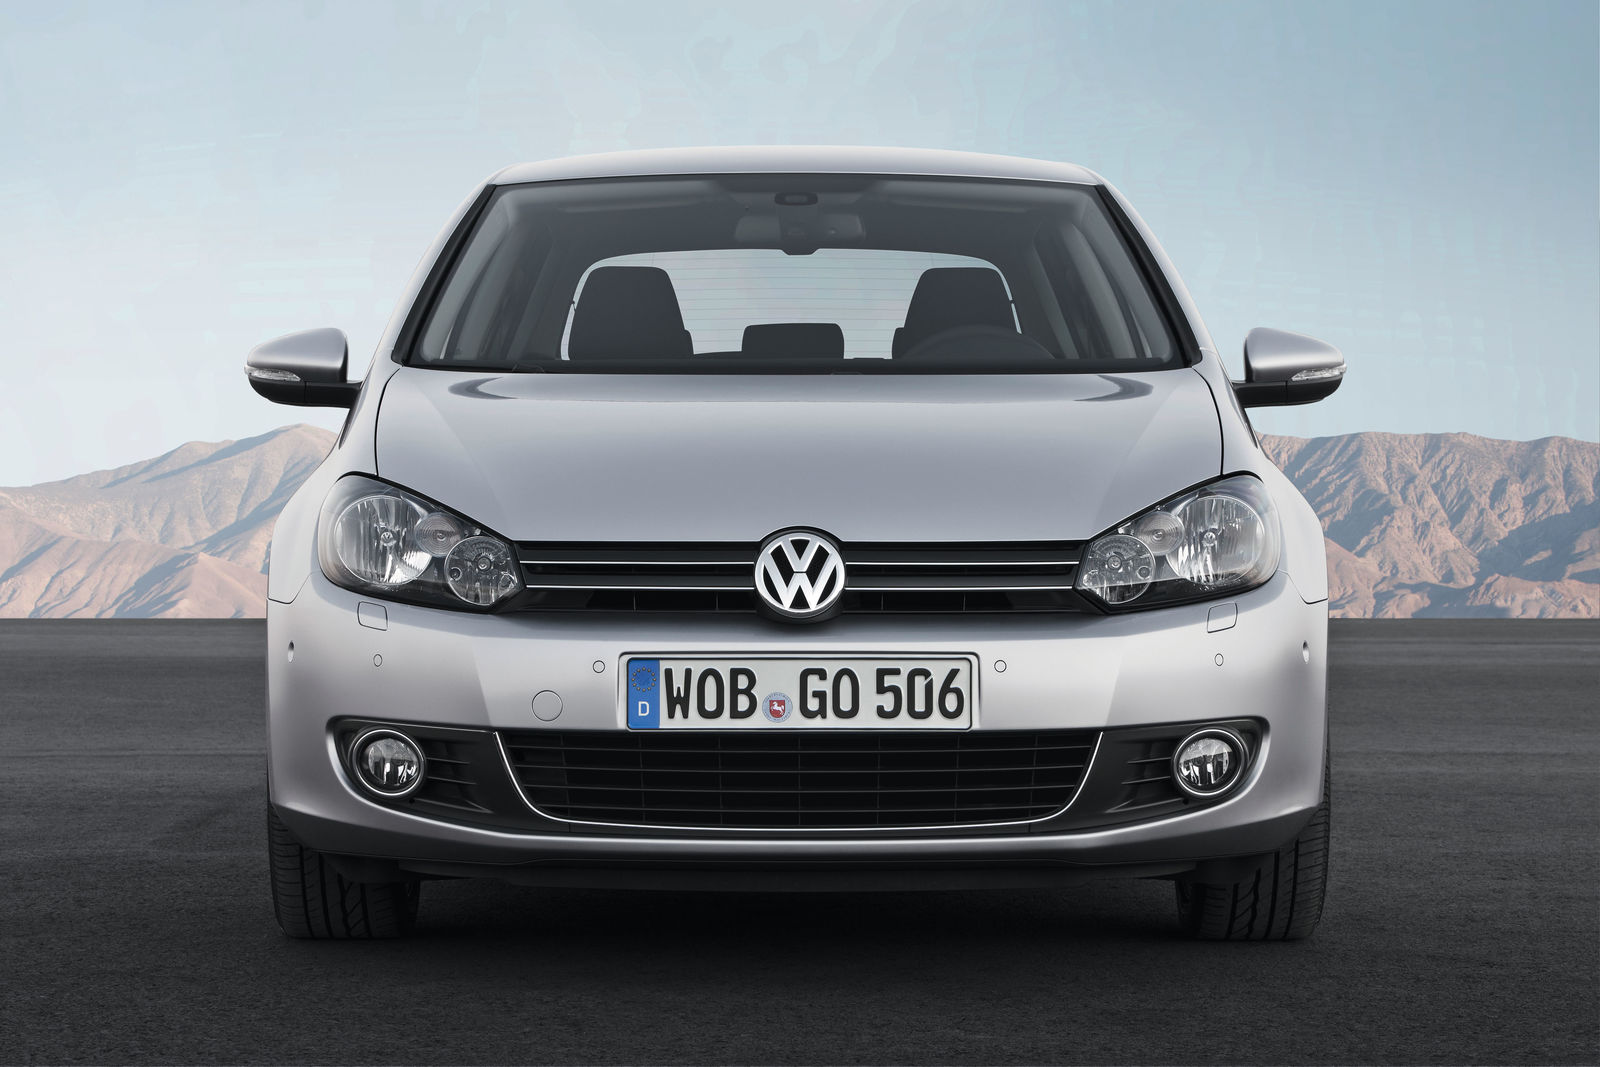 VW Golf VI: the design - Car Body Design